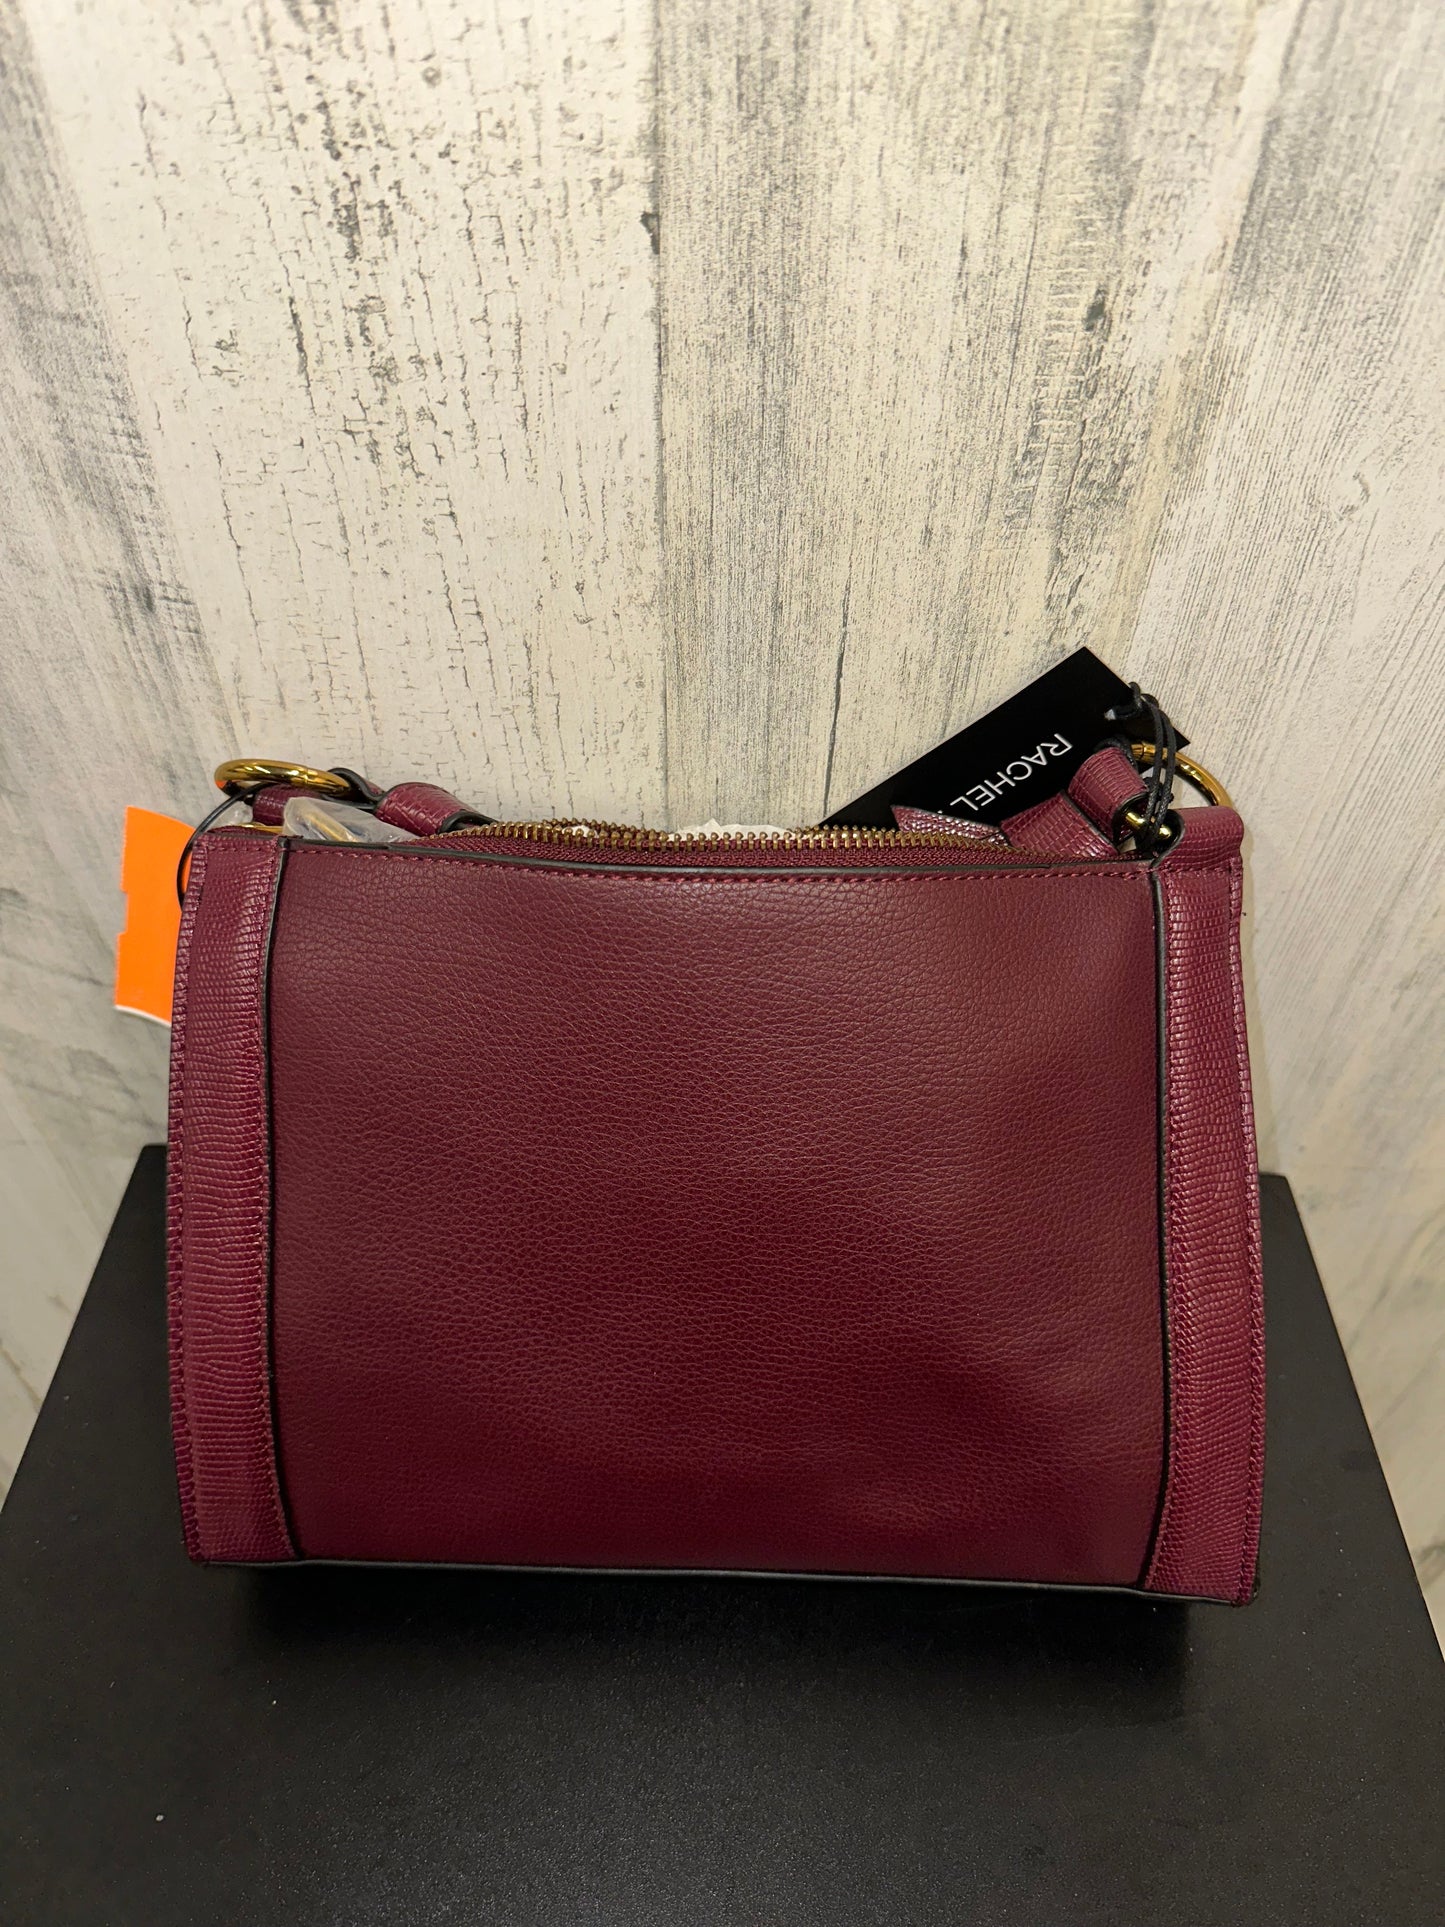 Handbag By Rachel Zoe  Size: Small